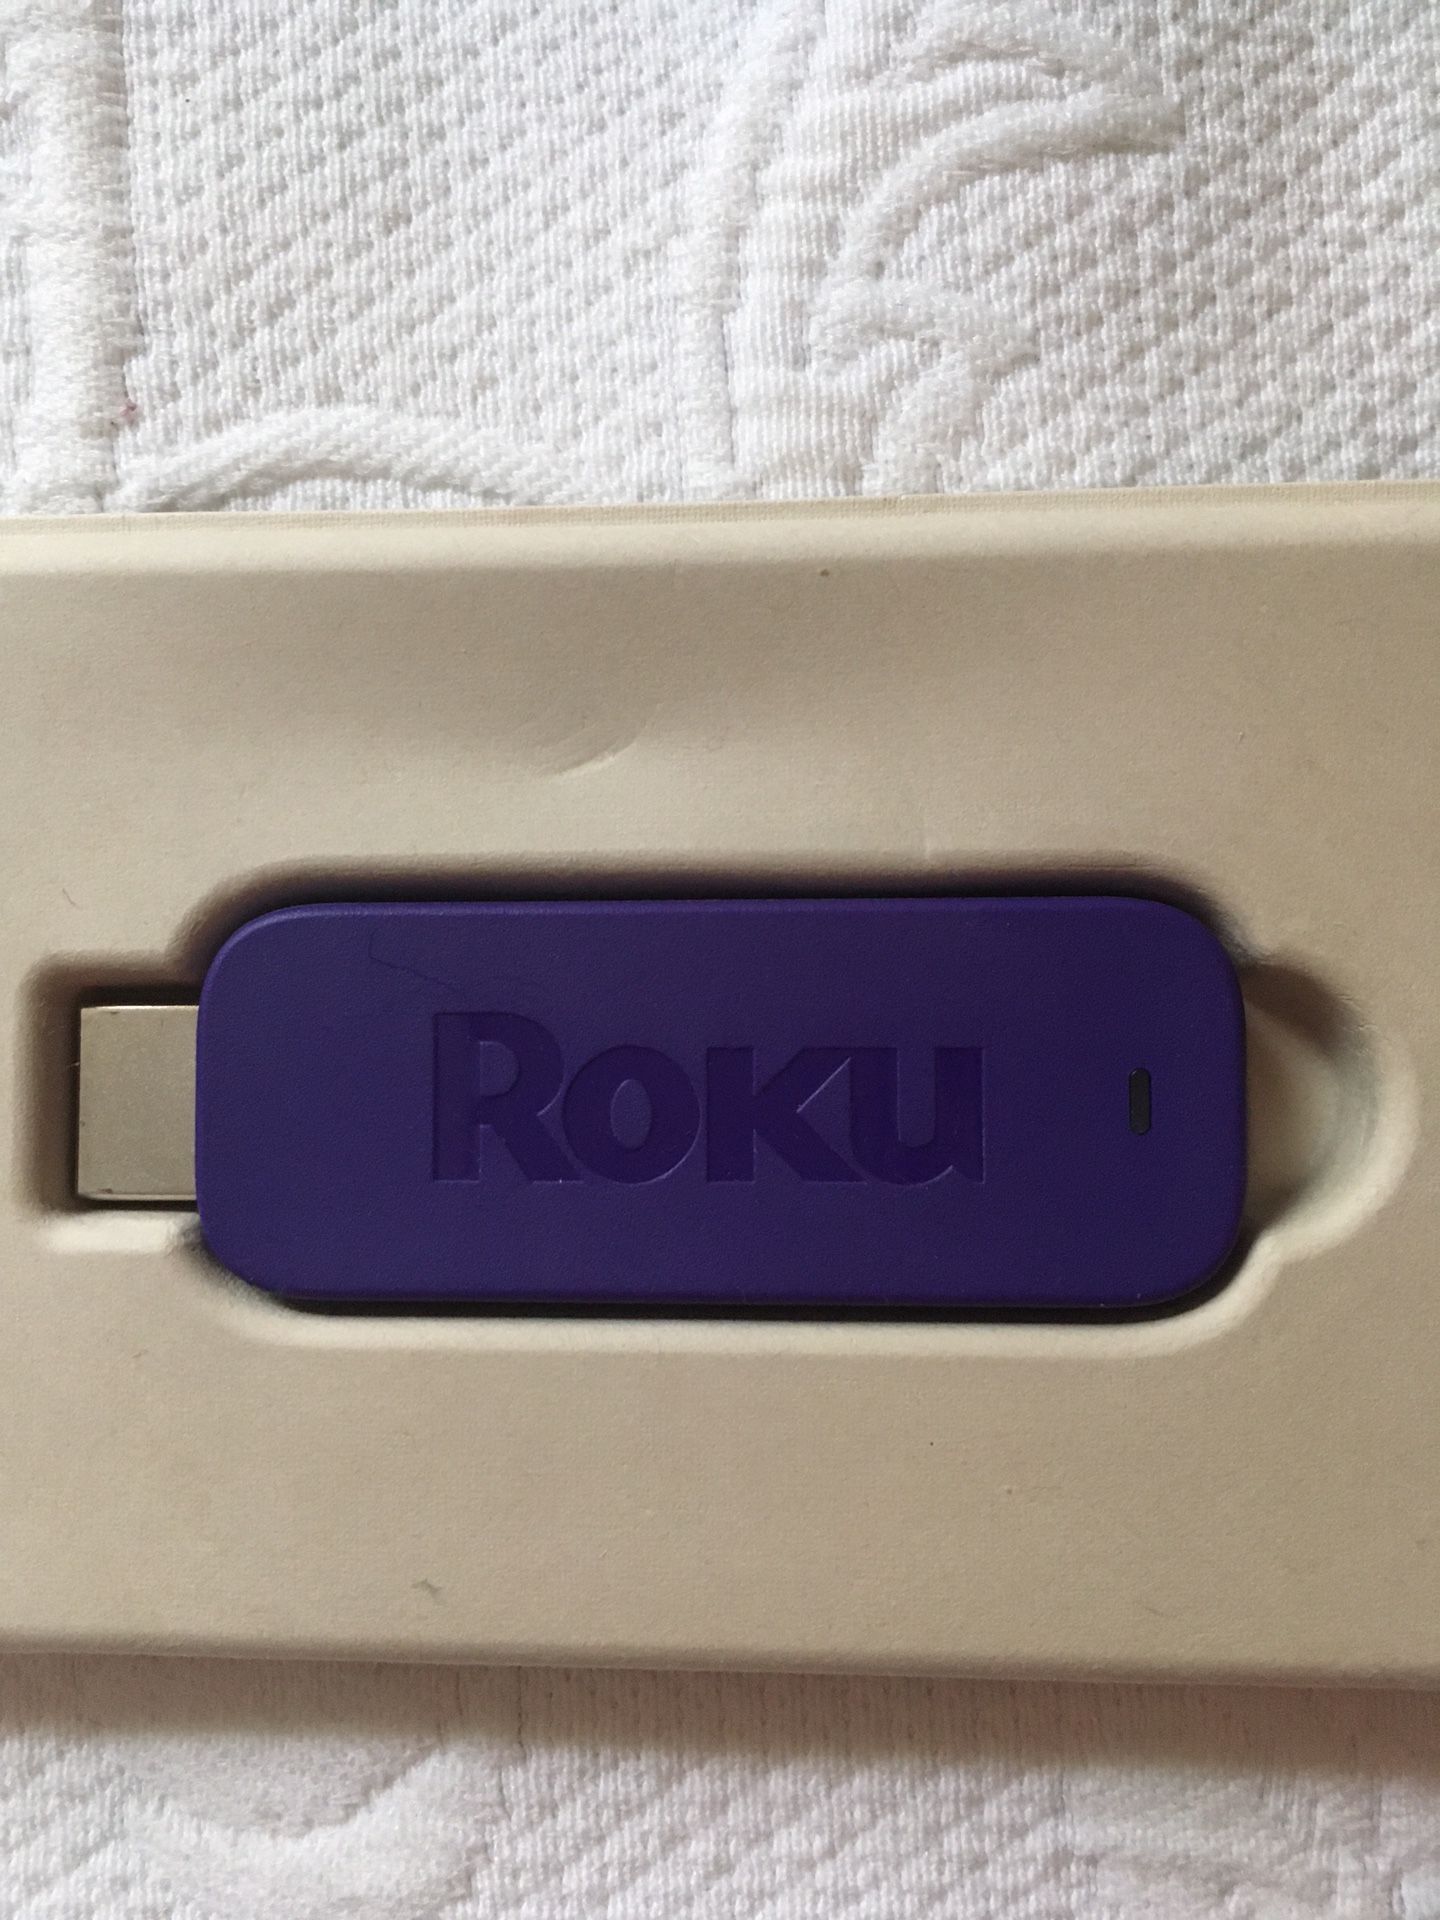 Roku Streaming Stick